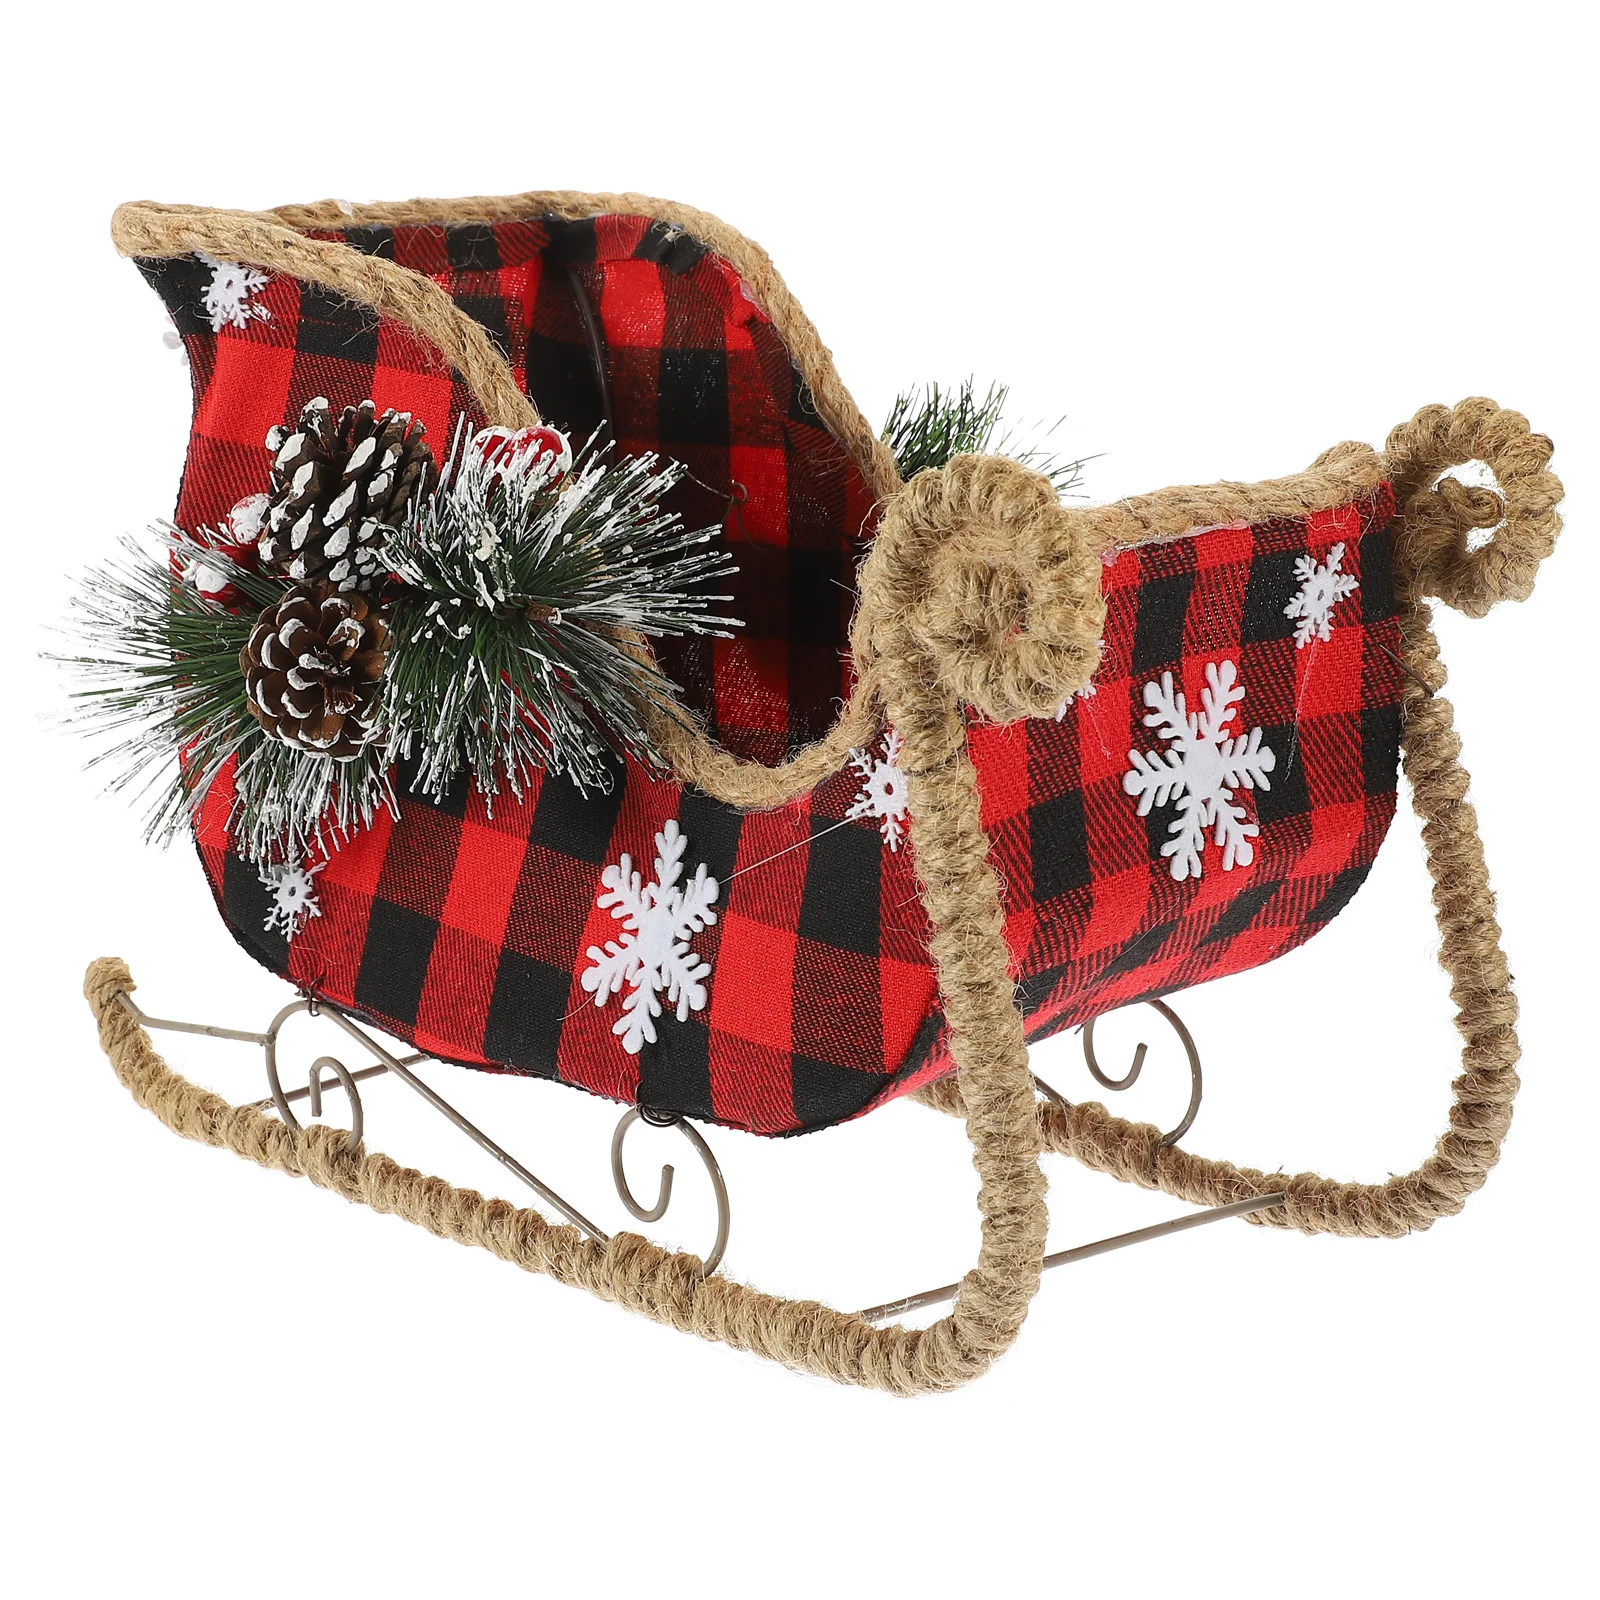 

Christmas Sleigh Decoration Santa Claus Sleigh Red Buffalo Plaid Table Centerpiece Holiday Decor Xmas Sled Ornament